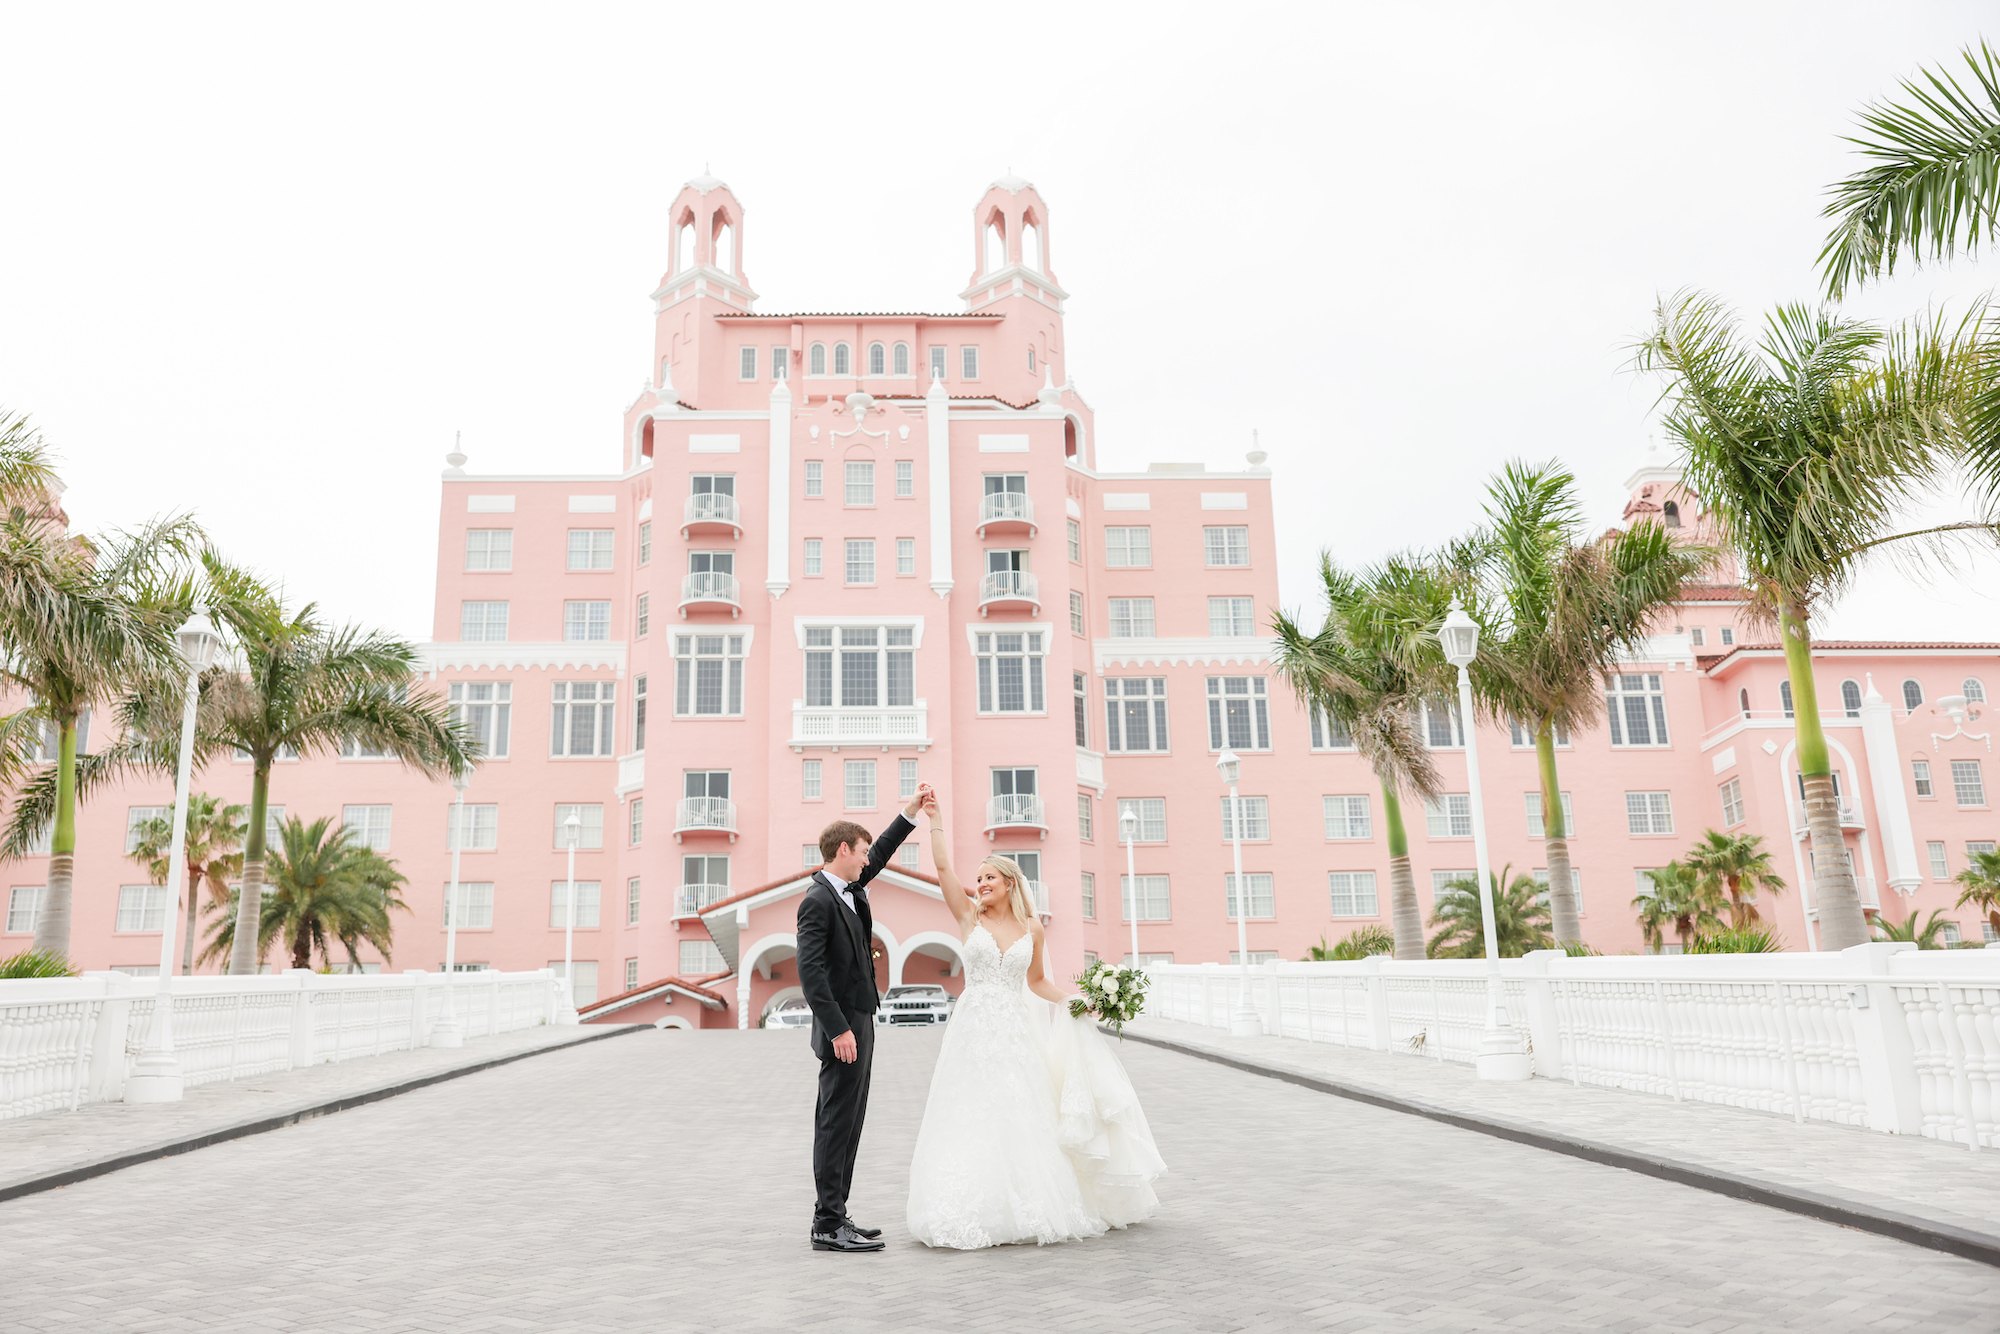 Bride and Groom Wedding Portrait | St Pete Beach Photographer Lifelong Photography | Venue The Don CeSar